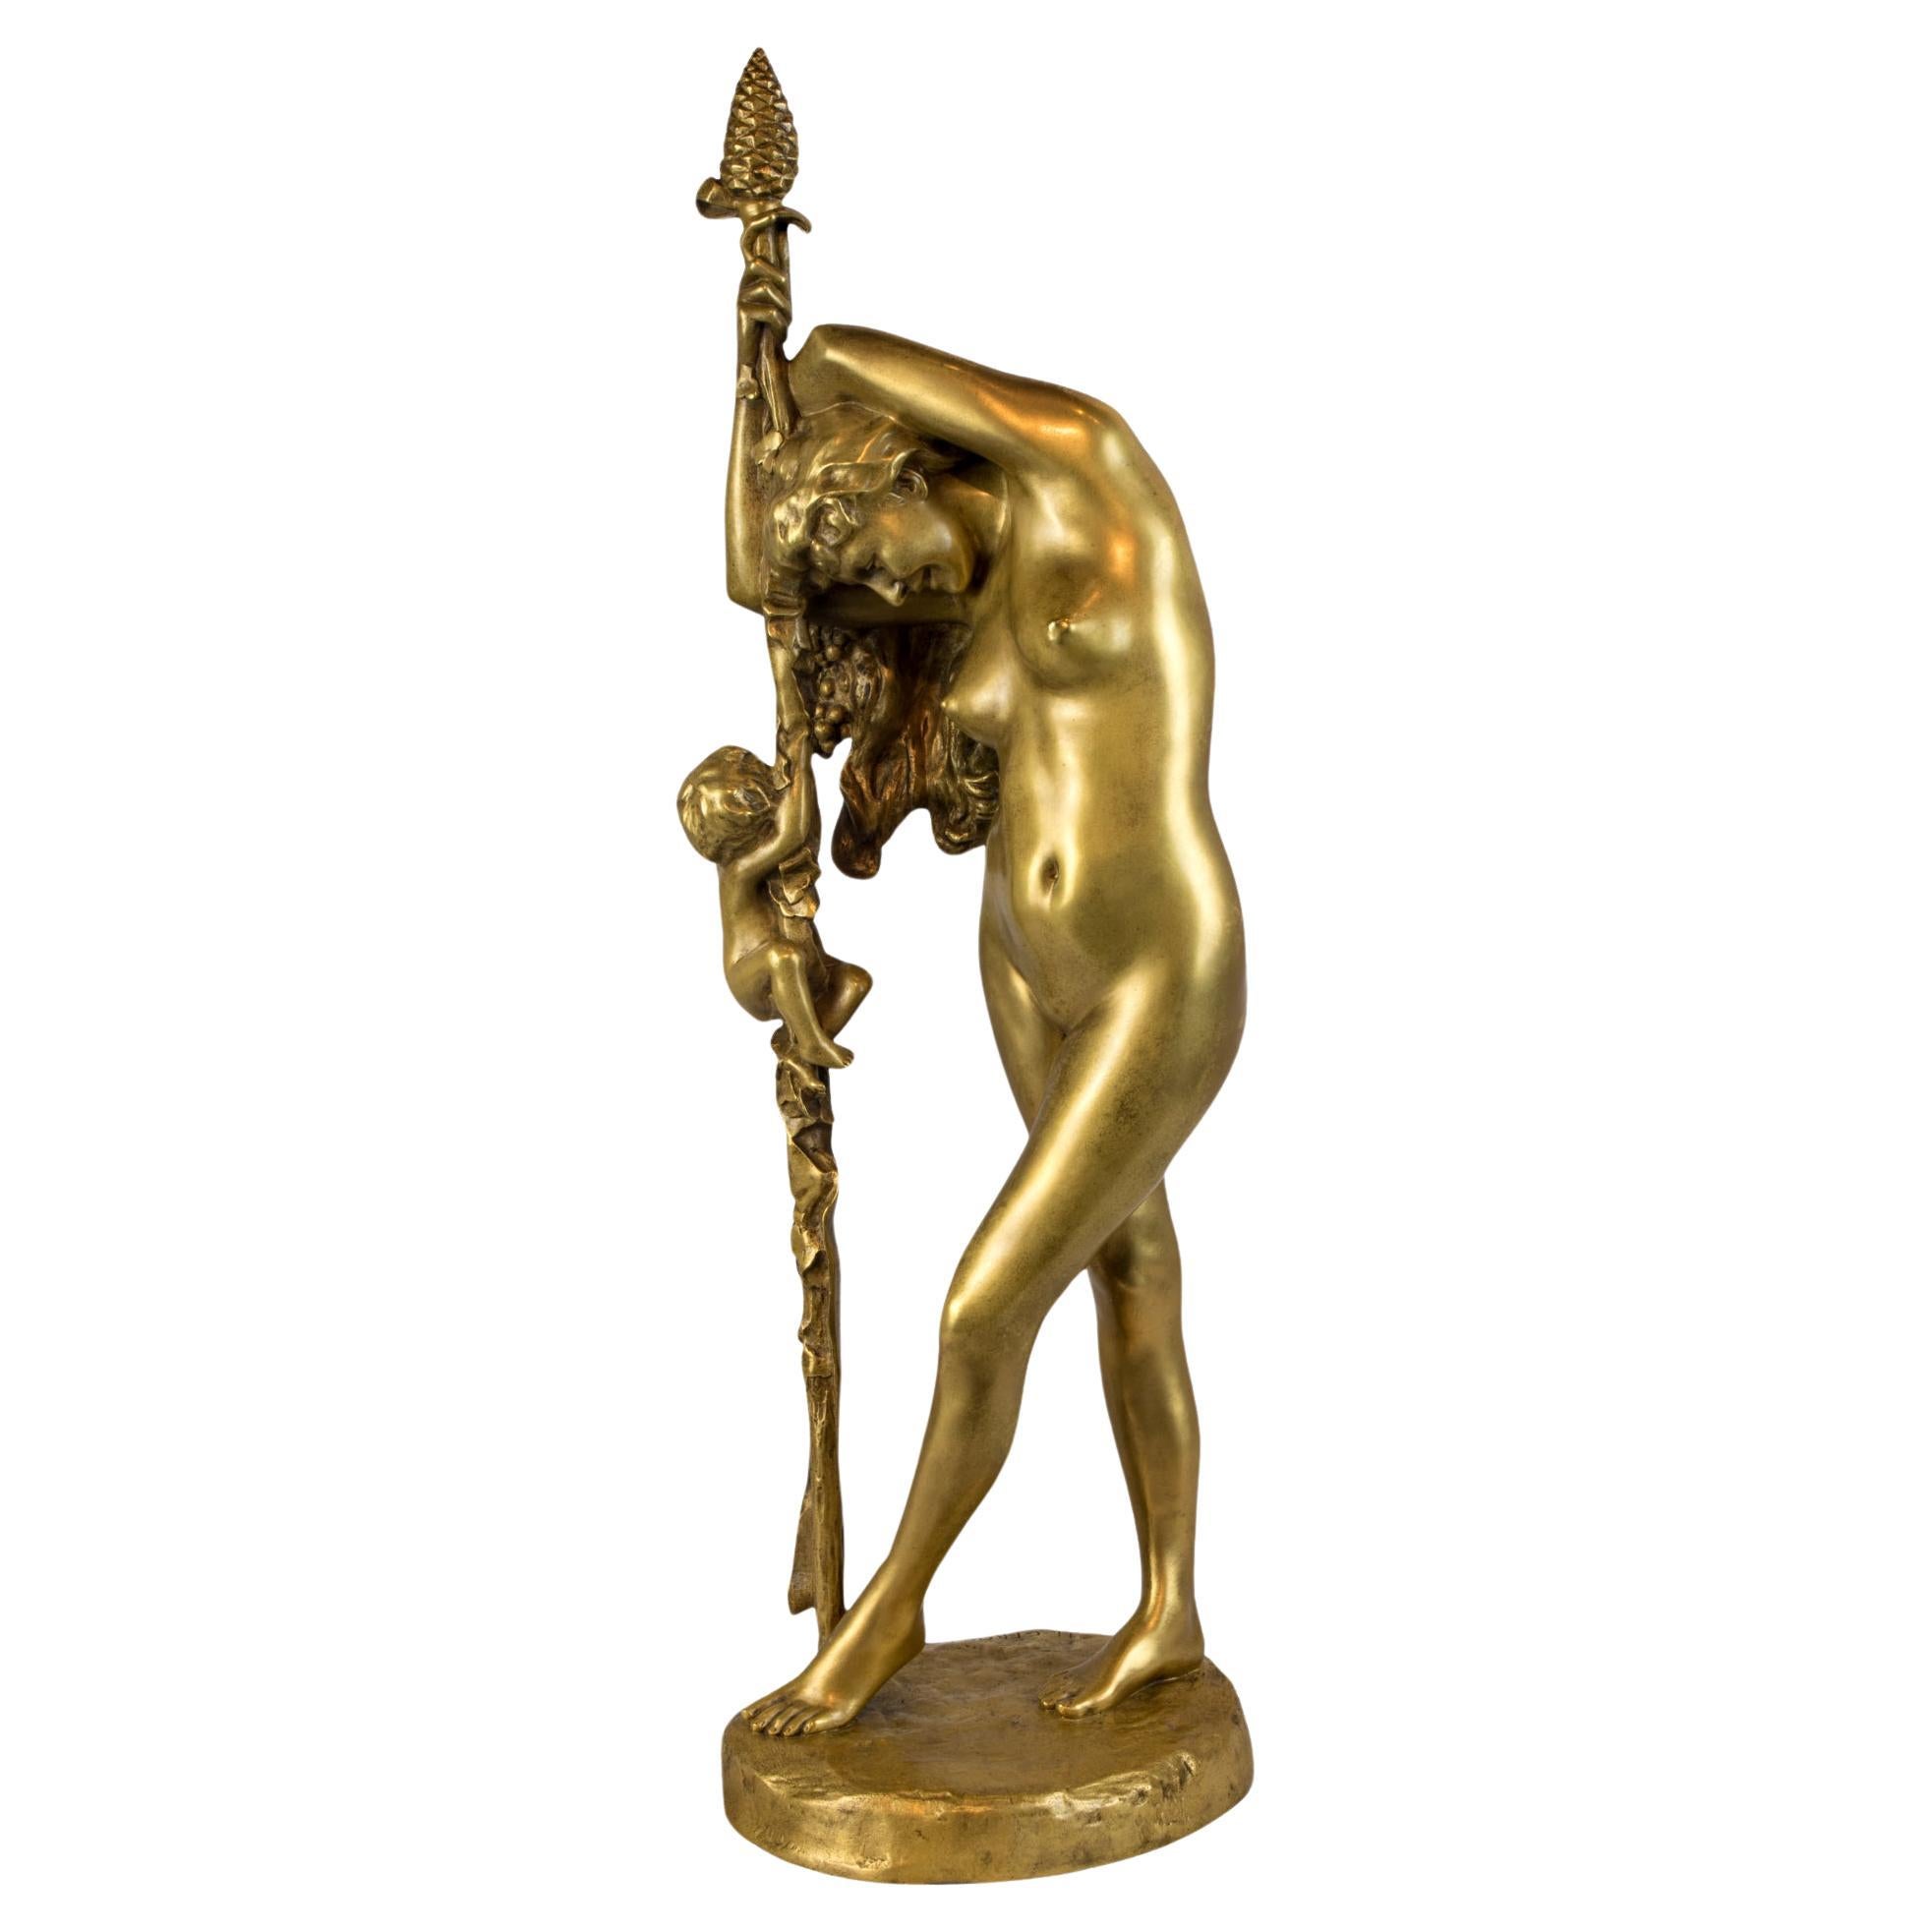 Fine 19th Century Gilt-Bronze Sculpture by JEAN-LEON GEROME